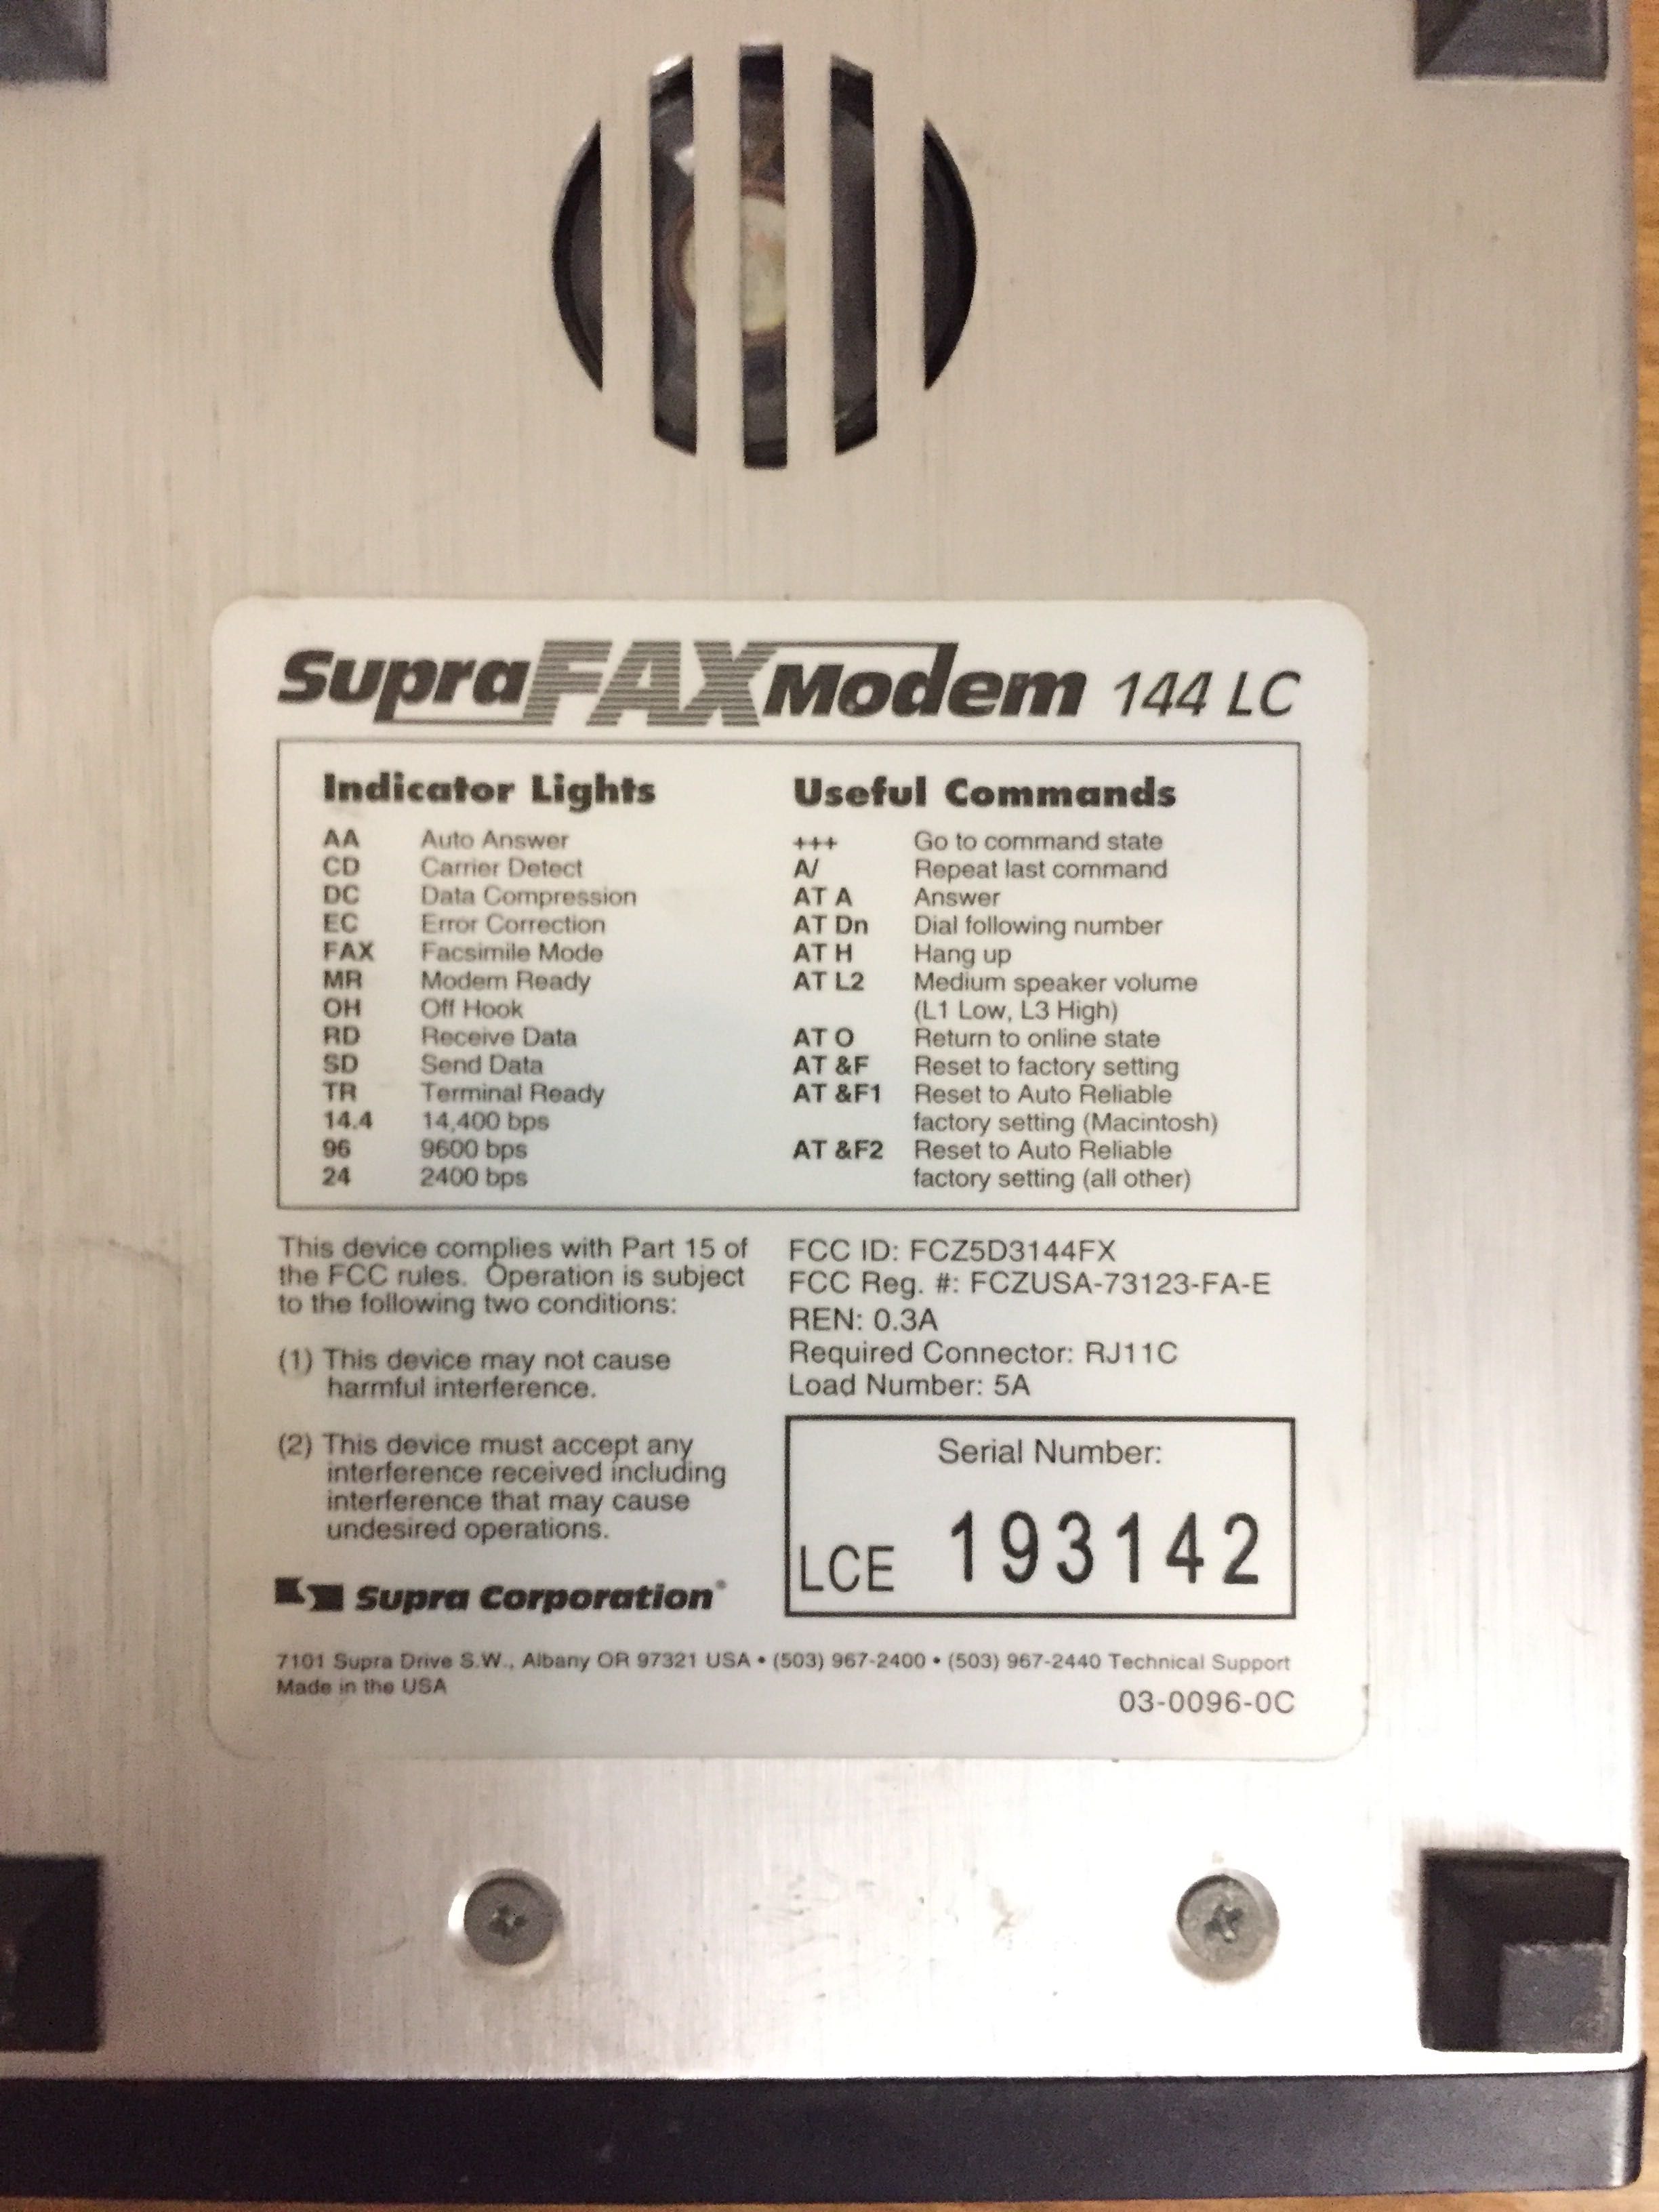 Supra fax modem 144 LC